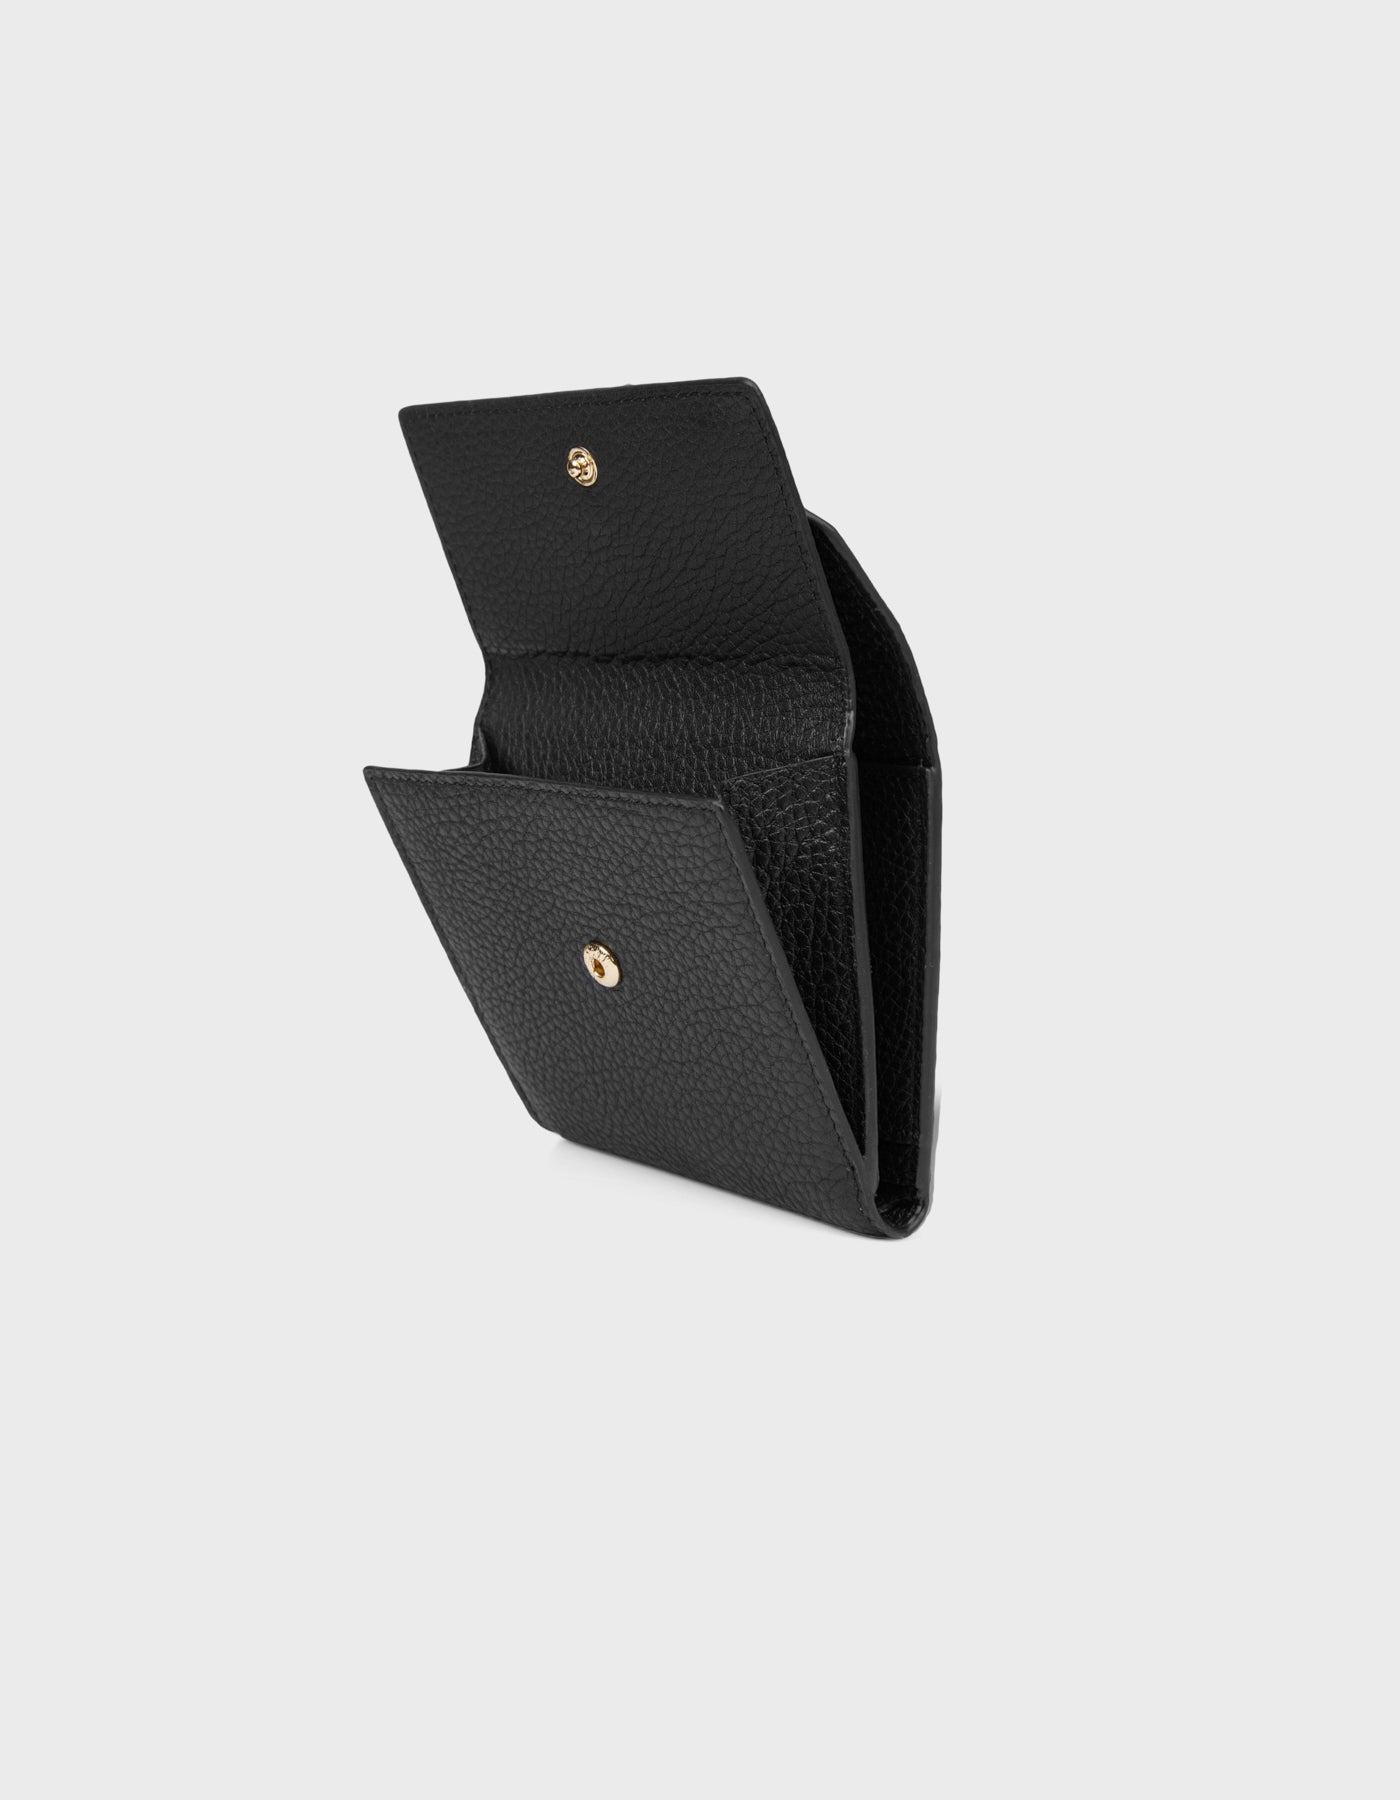 HiVa Atelier | Larus Compact Wallet Black | Her Tarza Uygun Deri Aksesuarlar